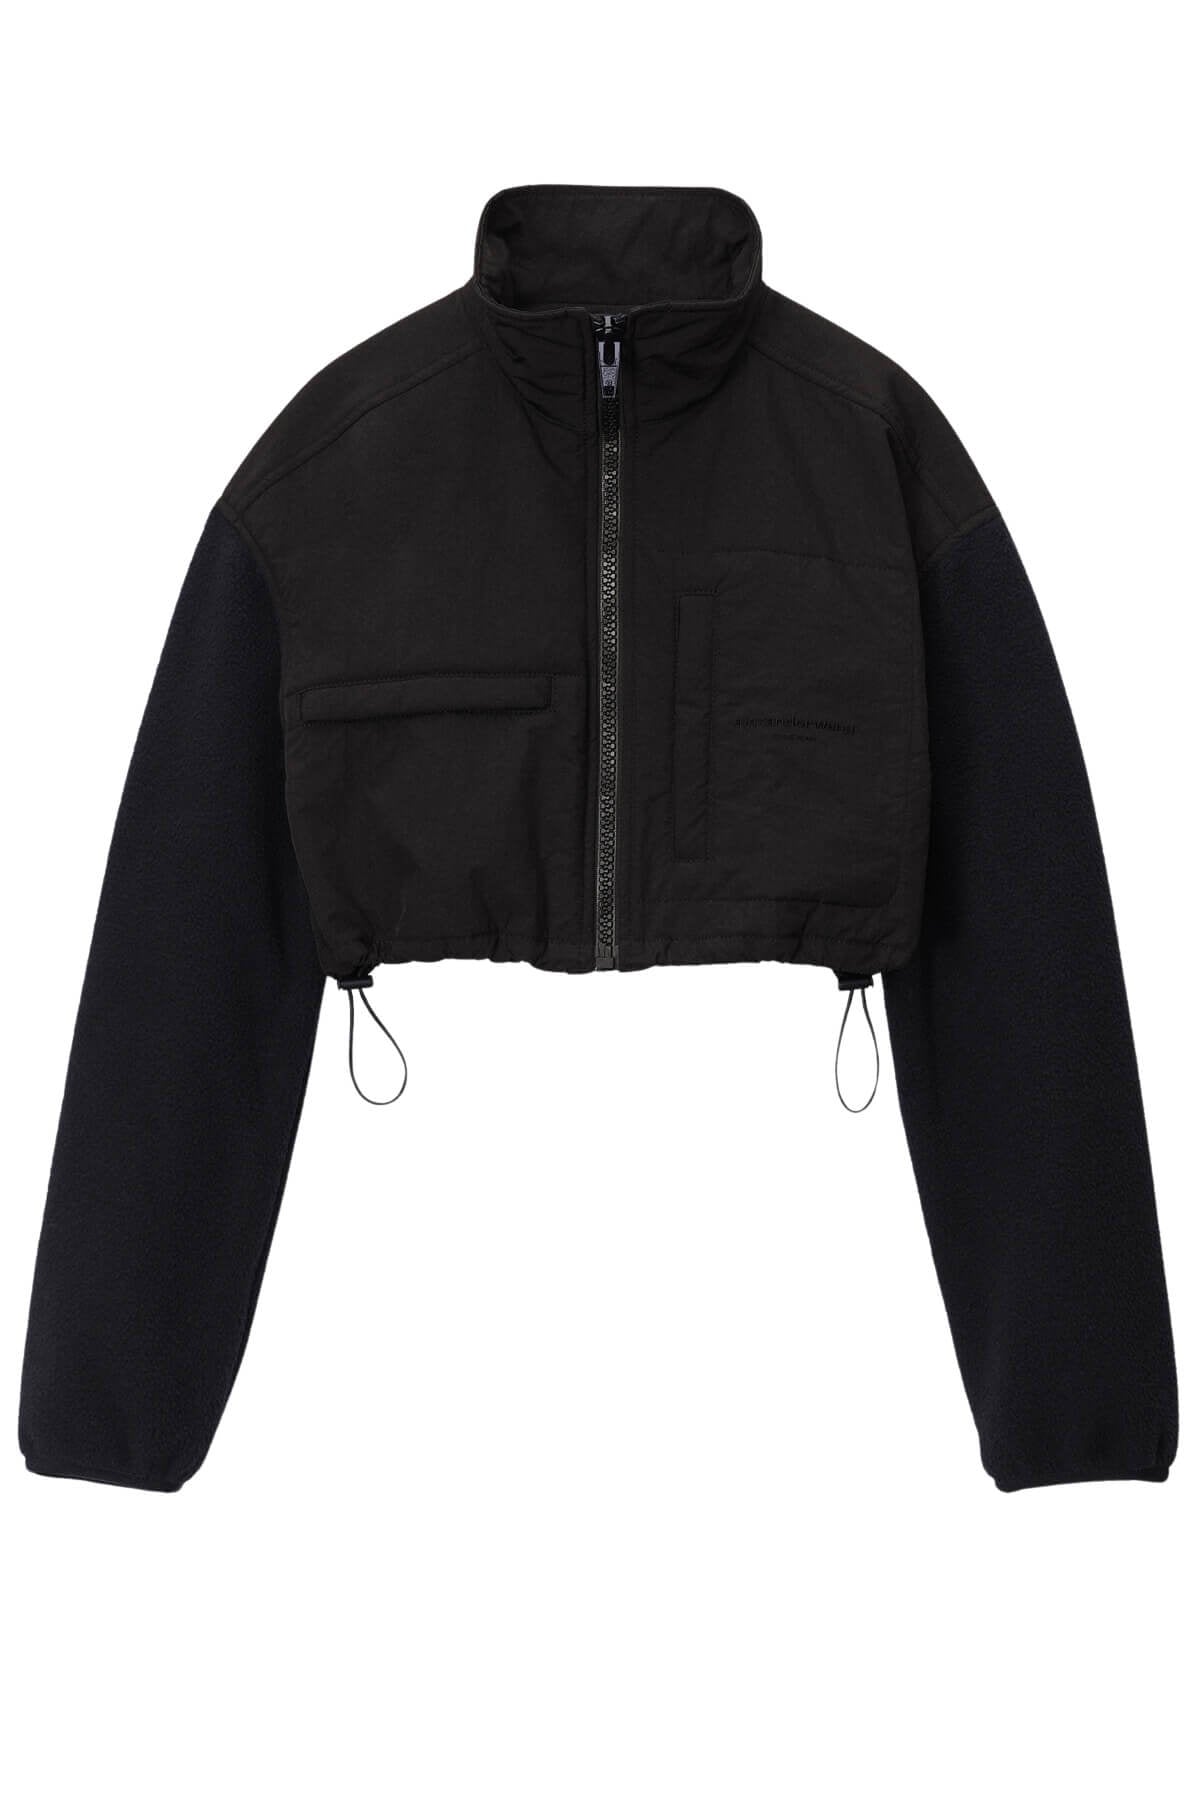 Alexander Wang Cropped Fleece Jacket - Black